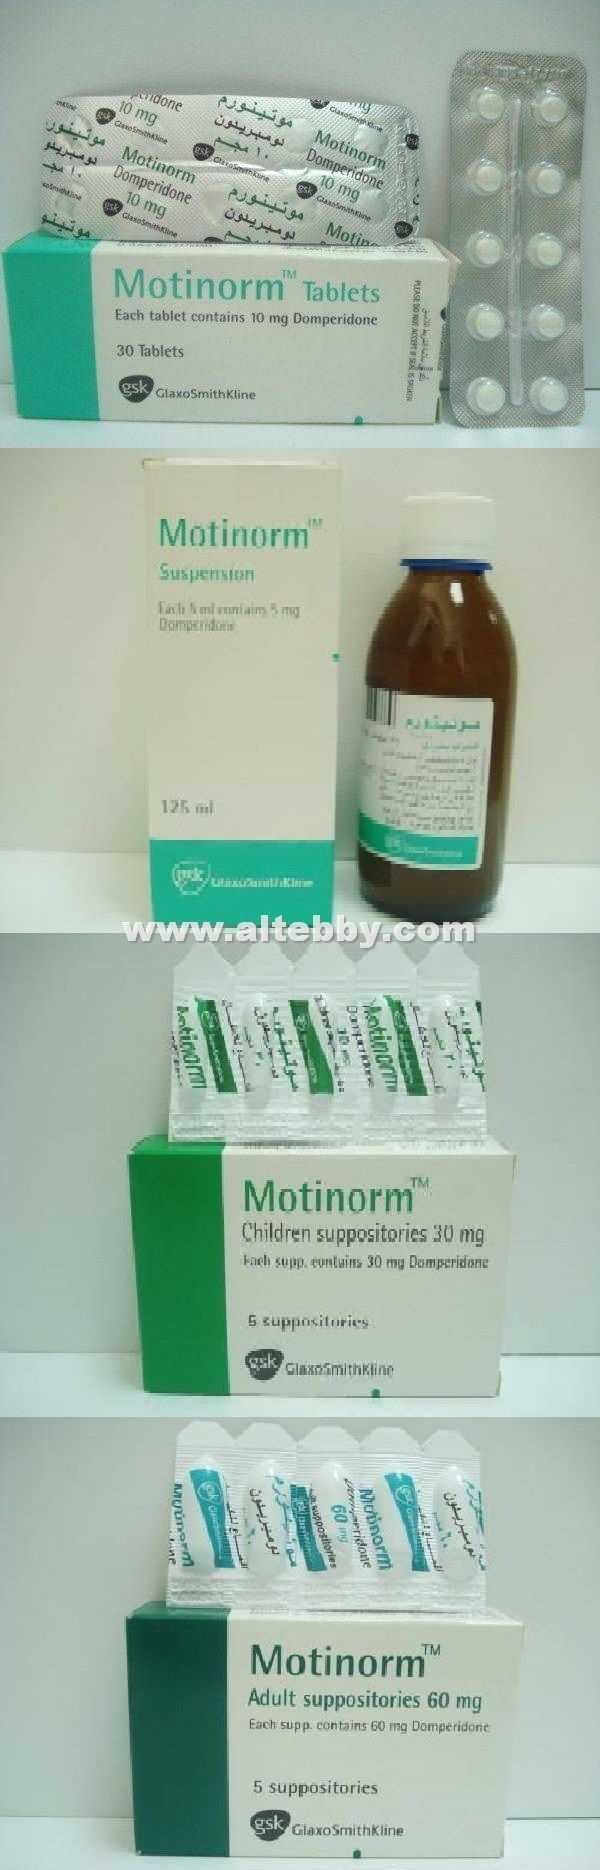 دواء drug موتينورم Motinorm